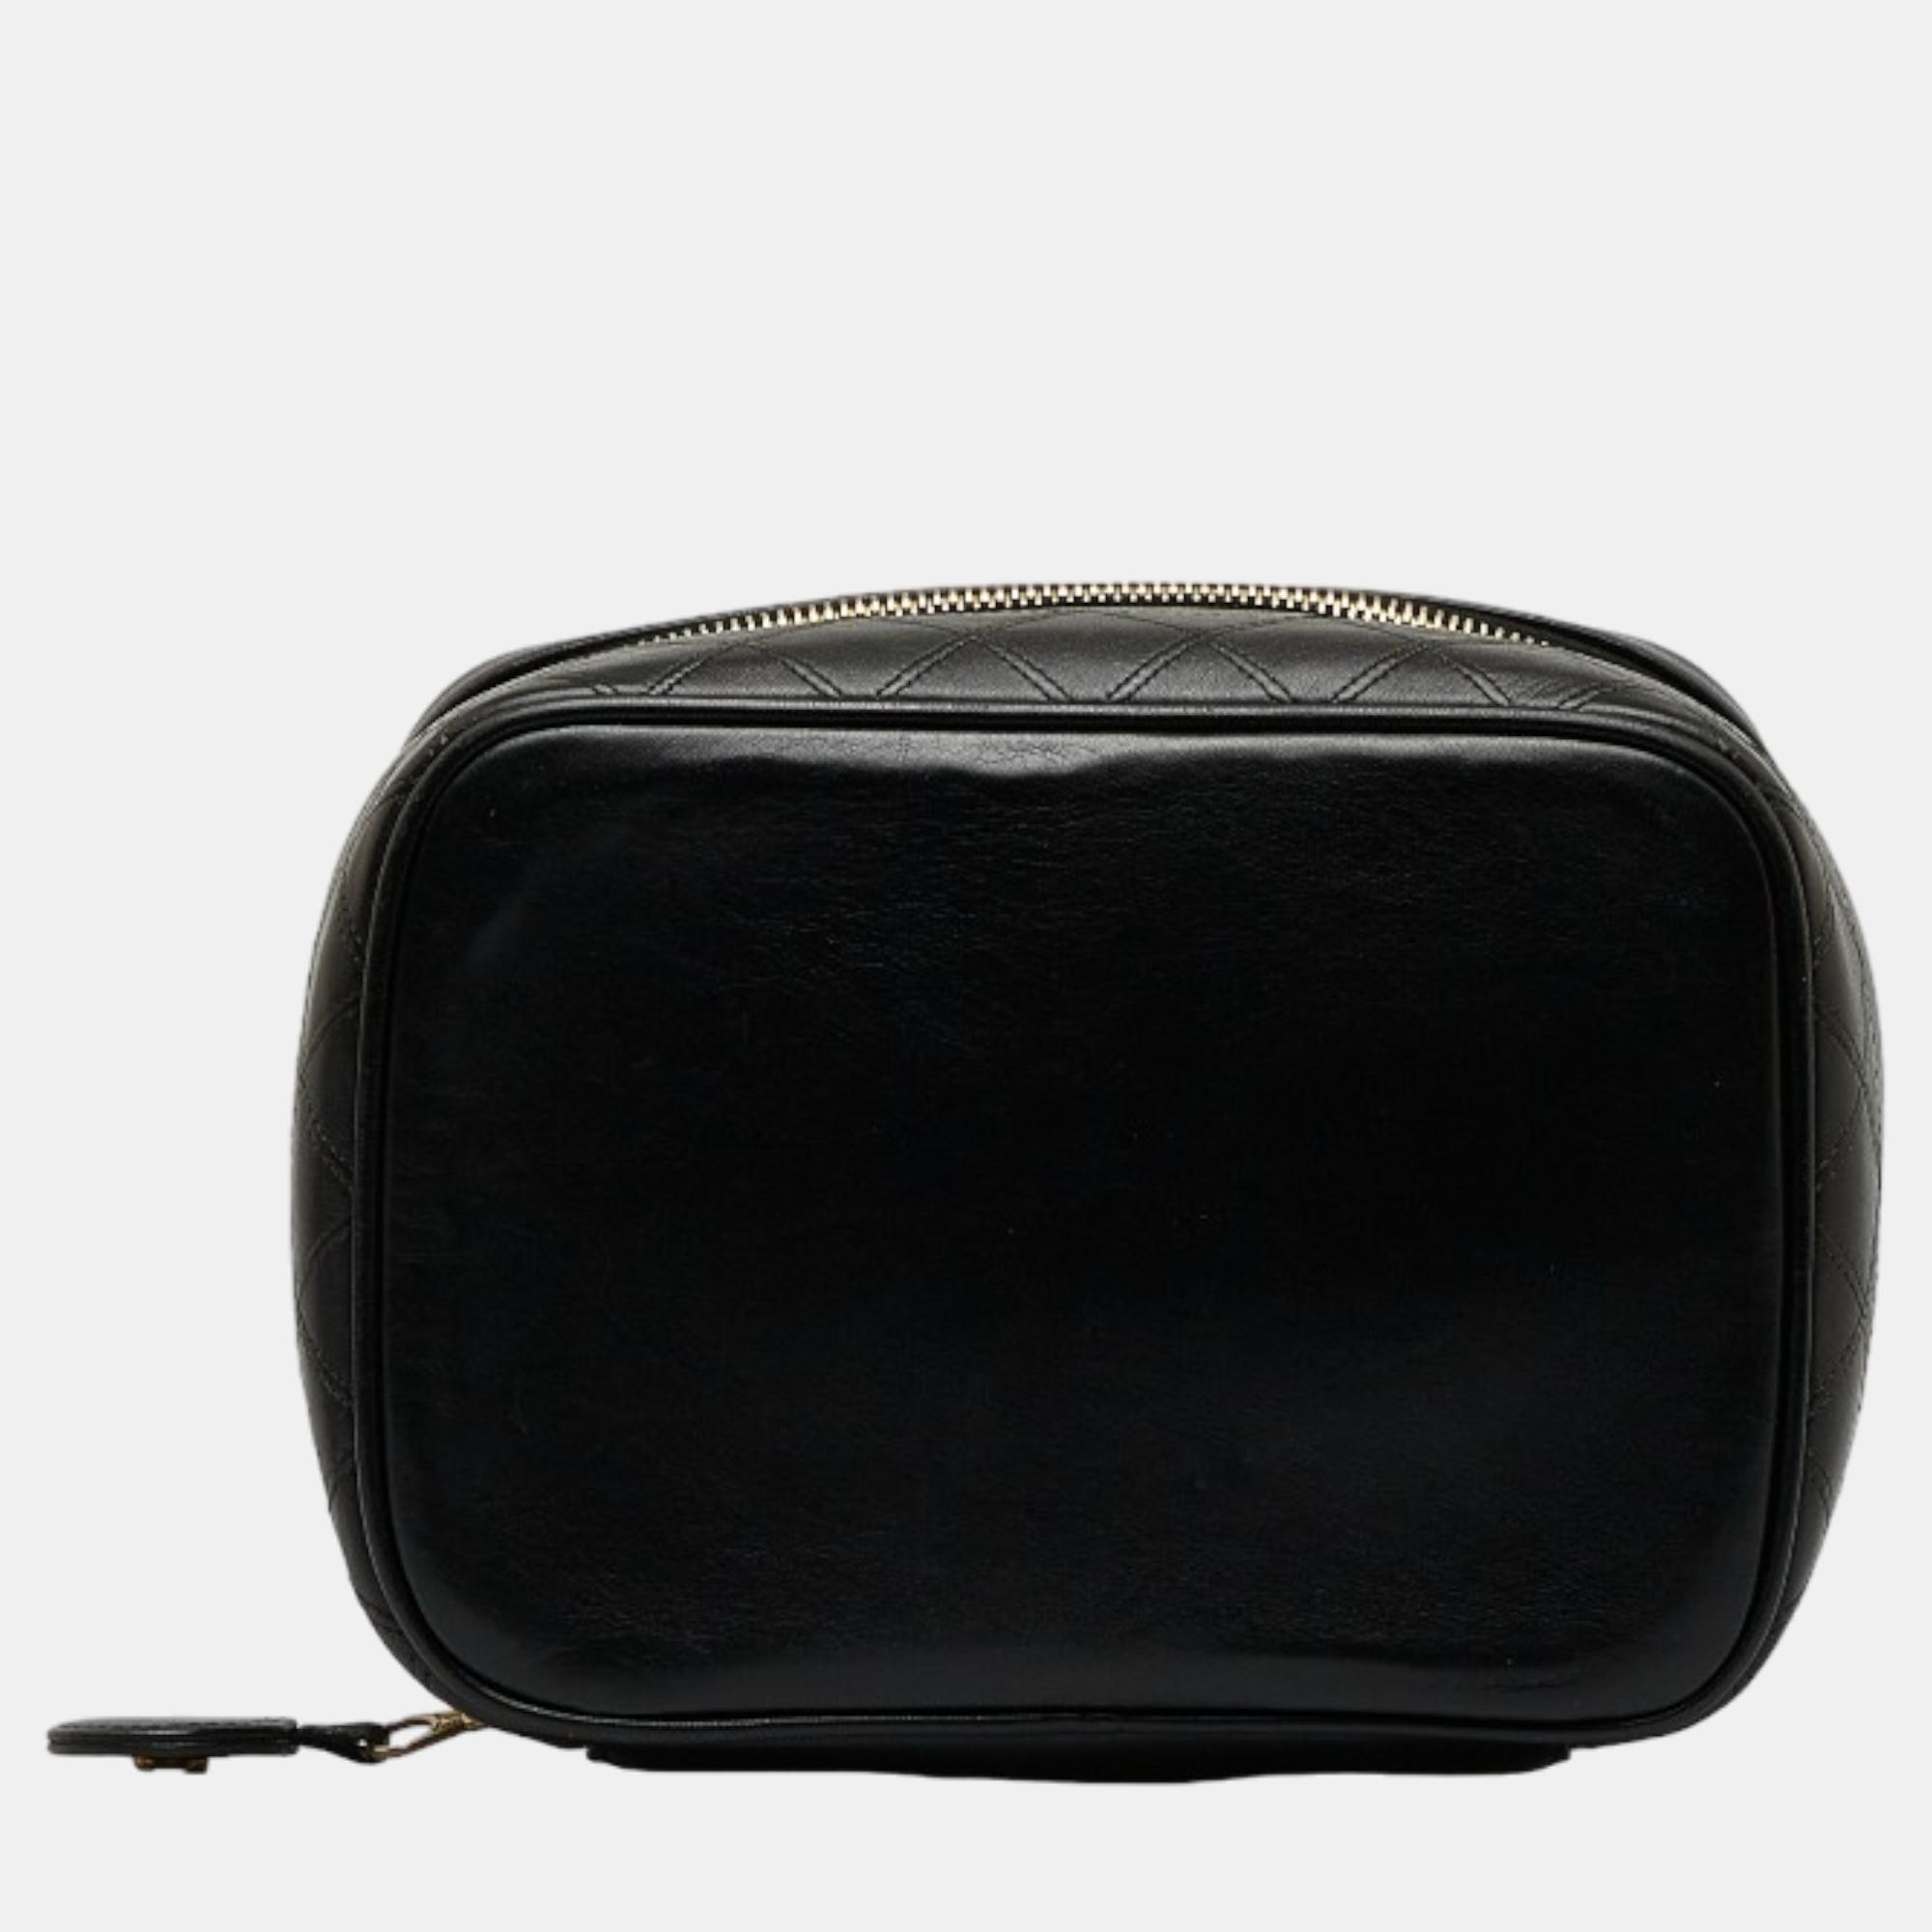 Chanel Black Leather Horizontal Vanity Bag